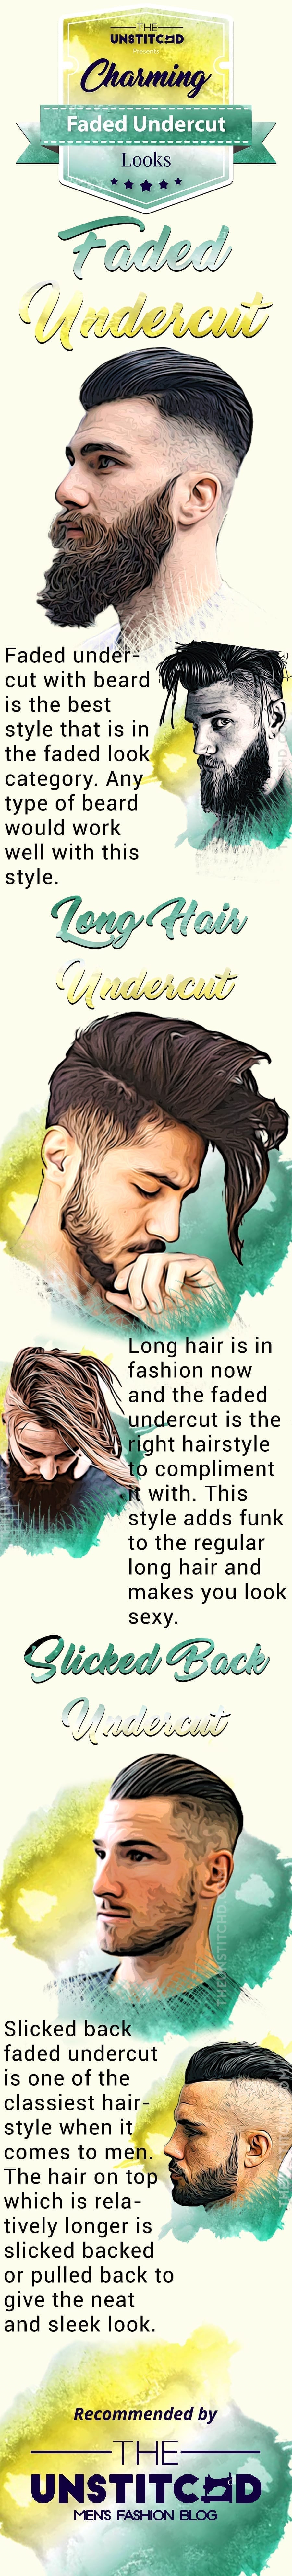 undercut-fade-hairstyle-info